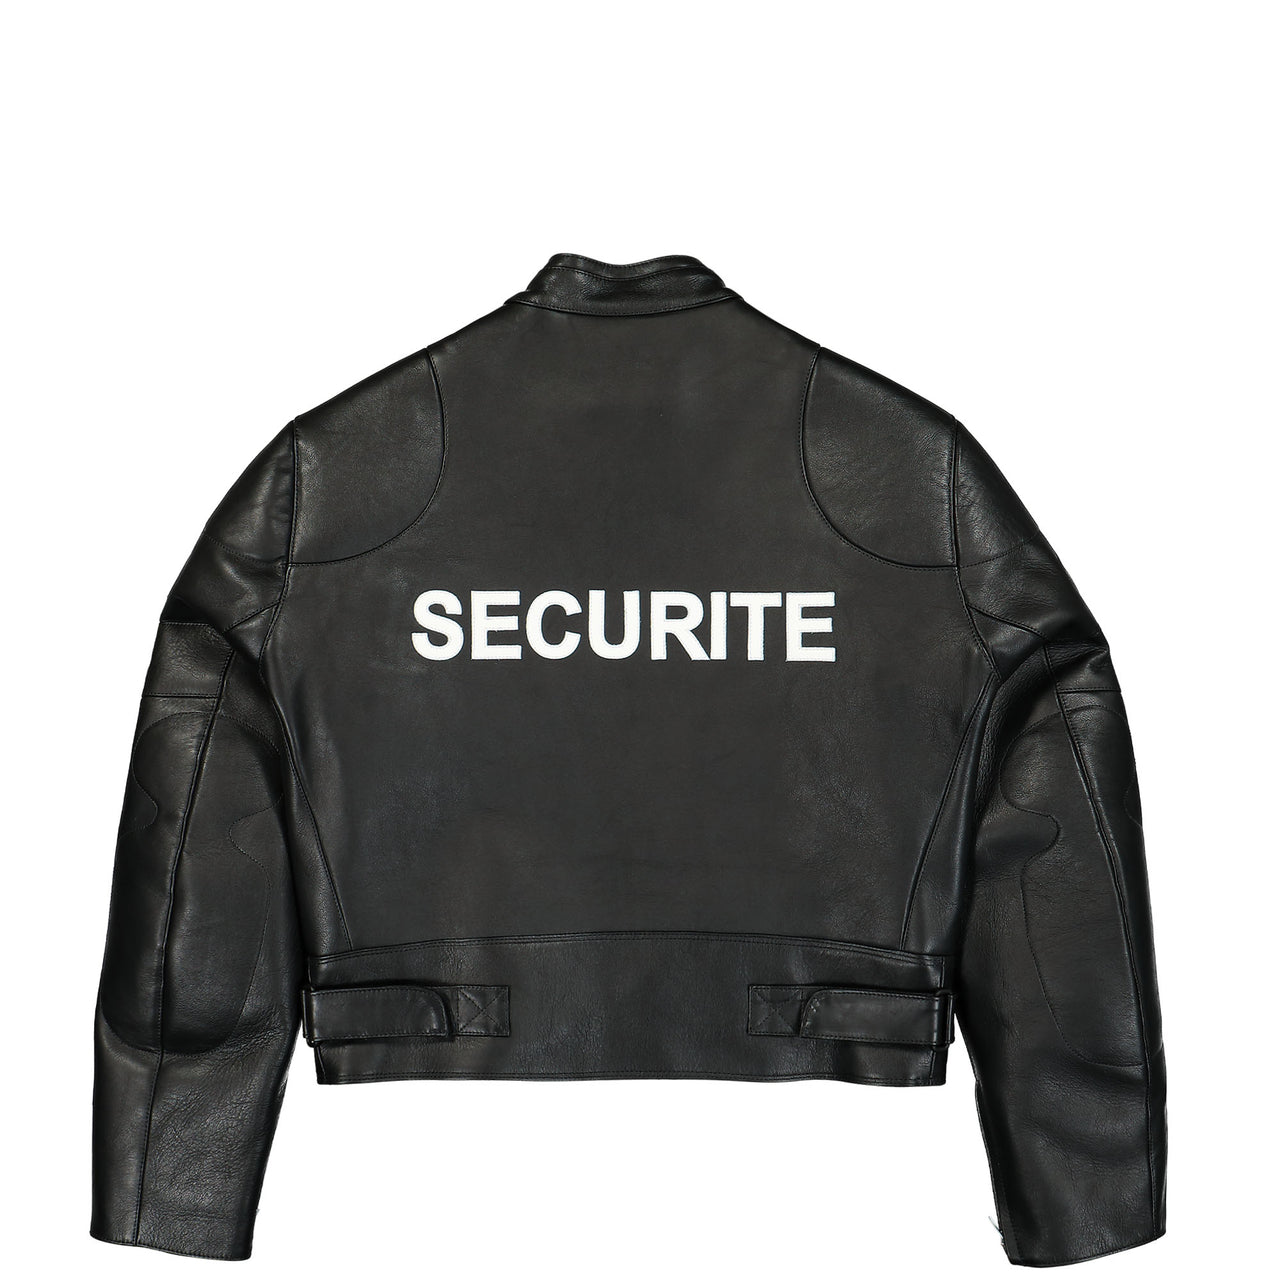 Securite Motorcross Jacket